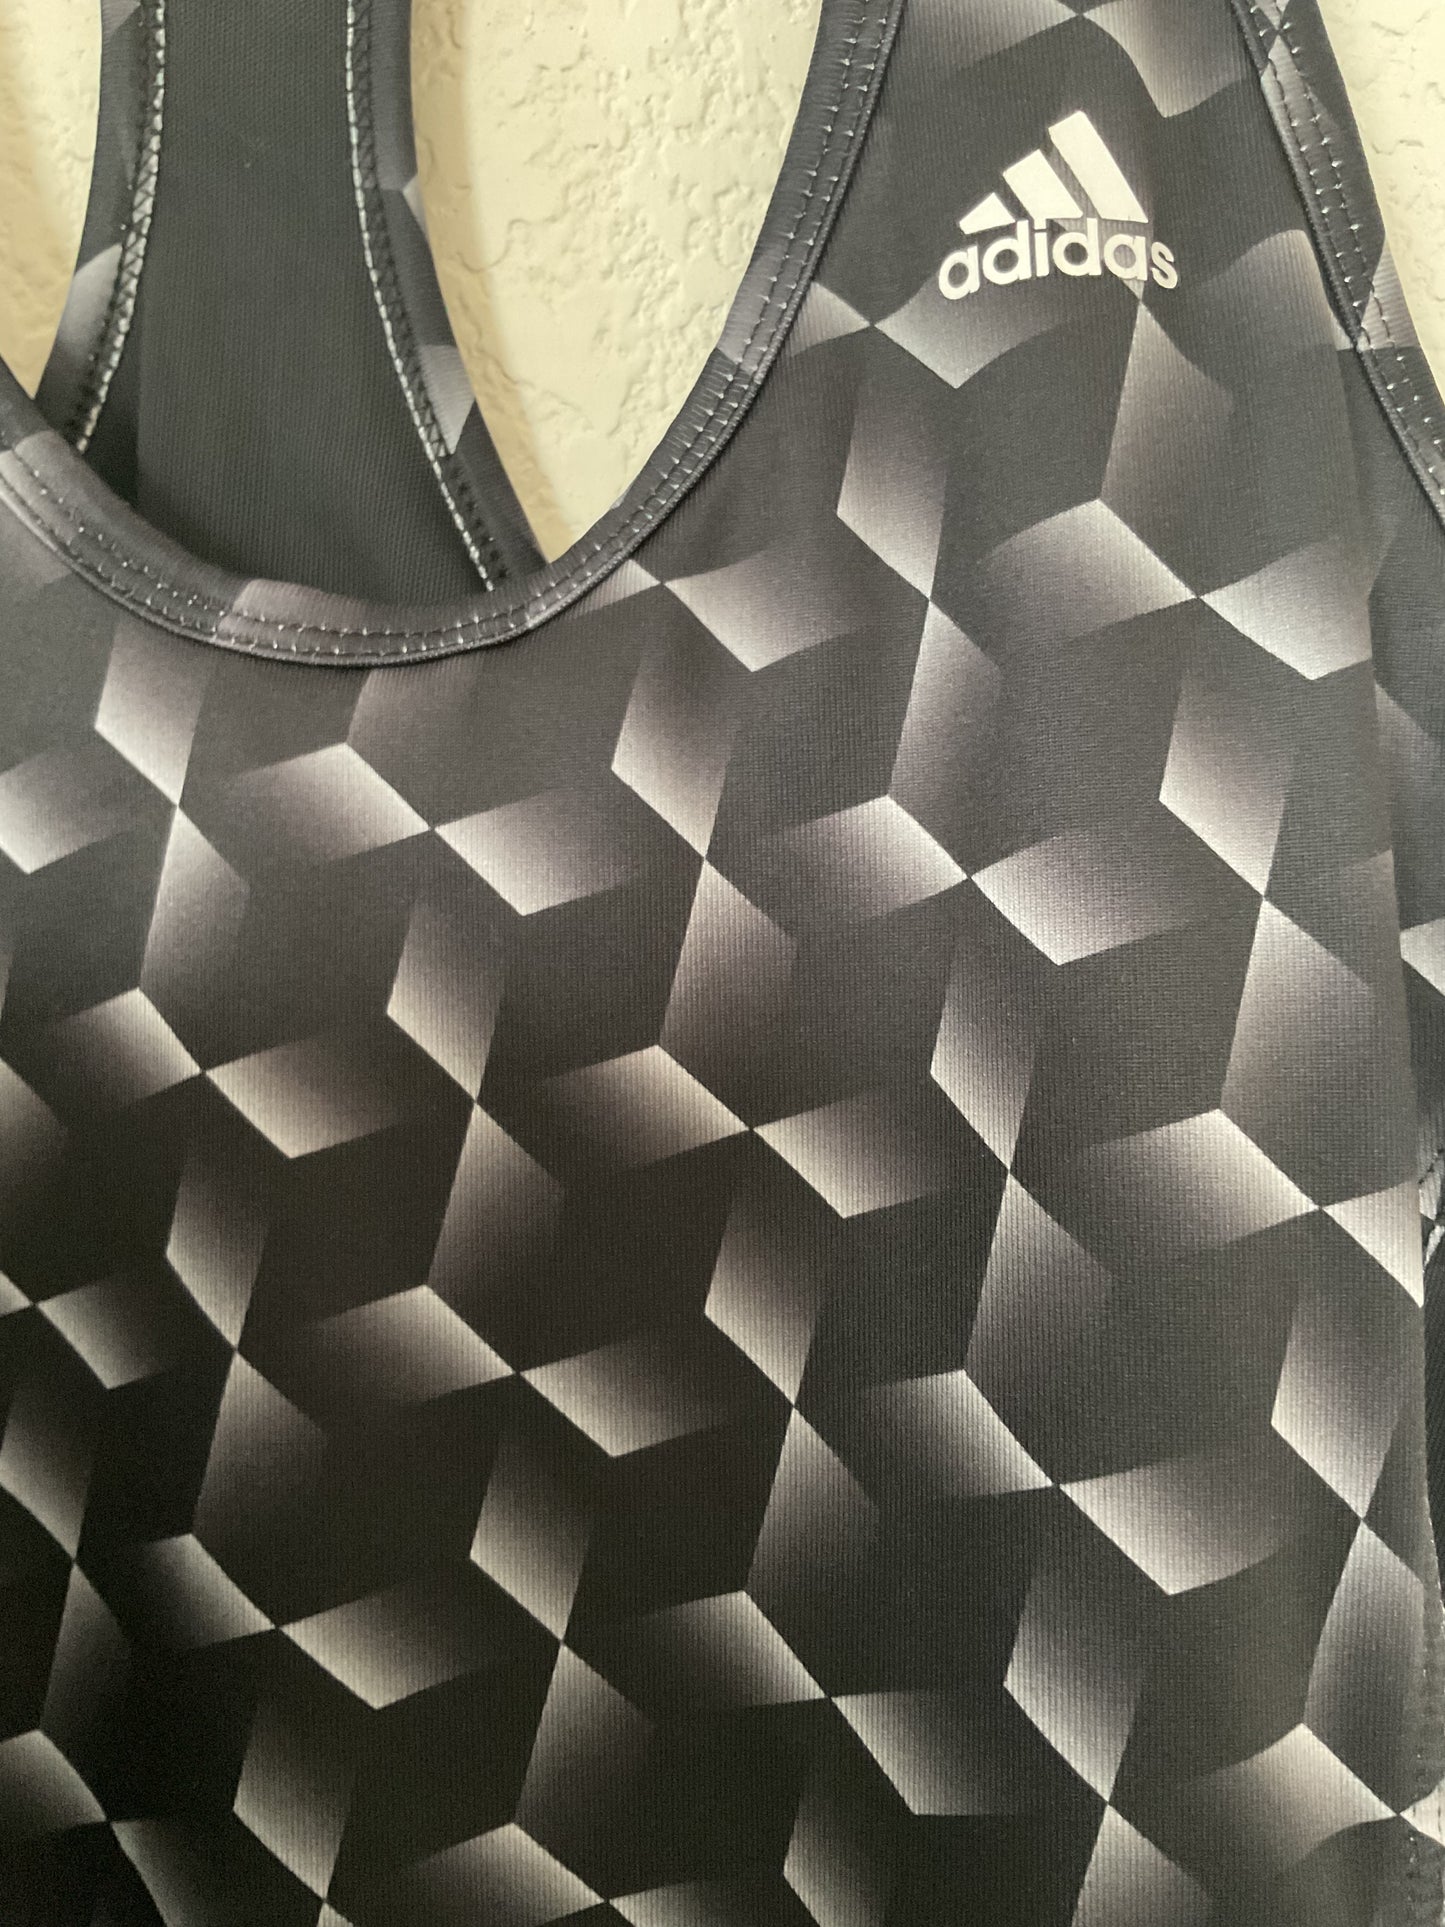 Adidas Built Bra Women’s Active Tank Top Shirt Size S